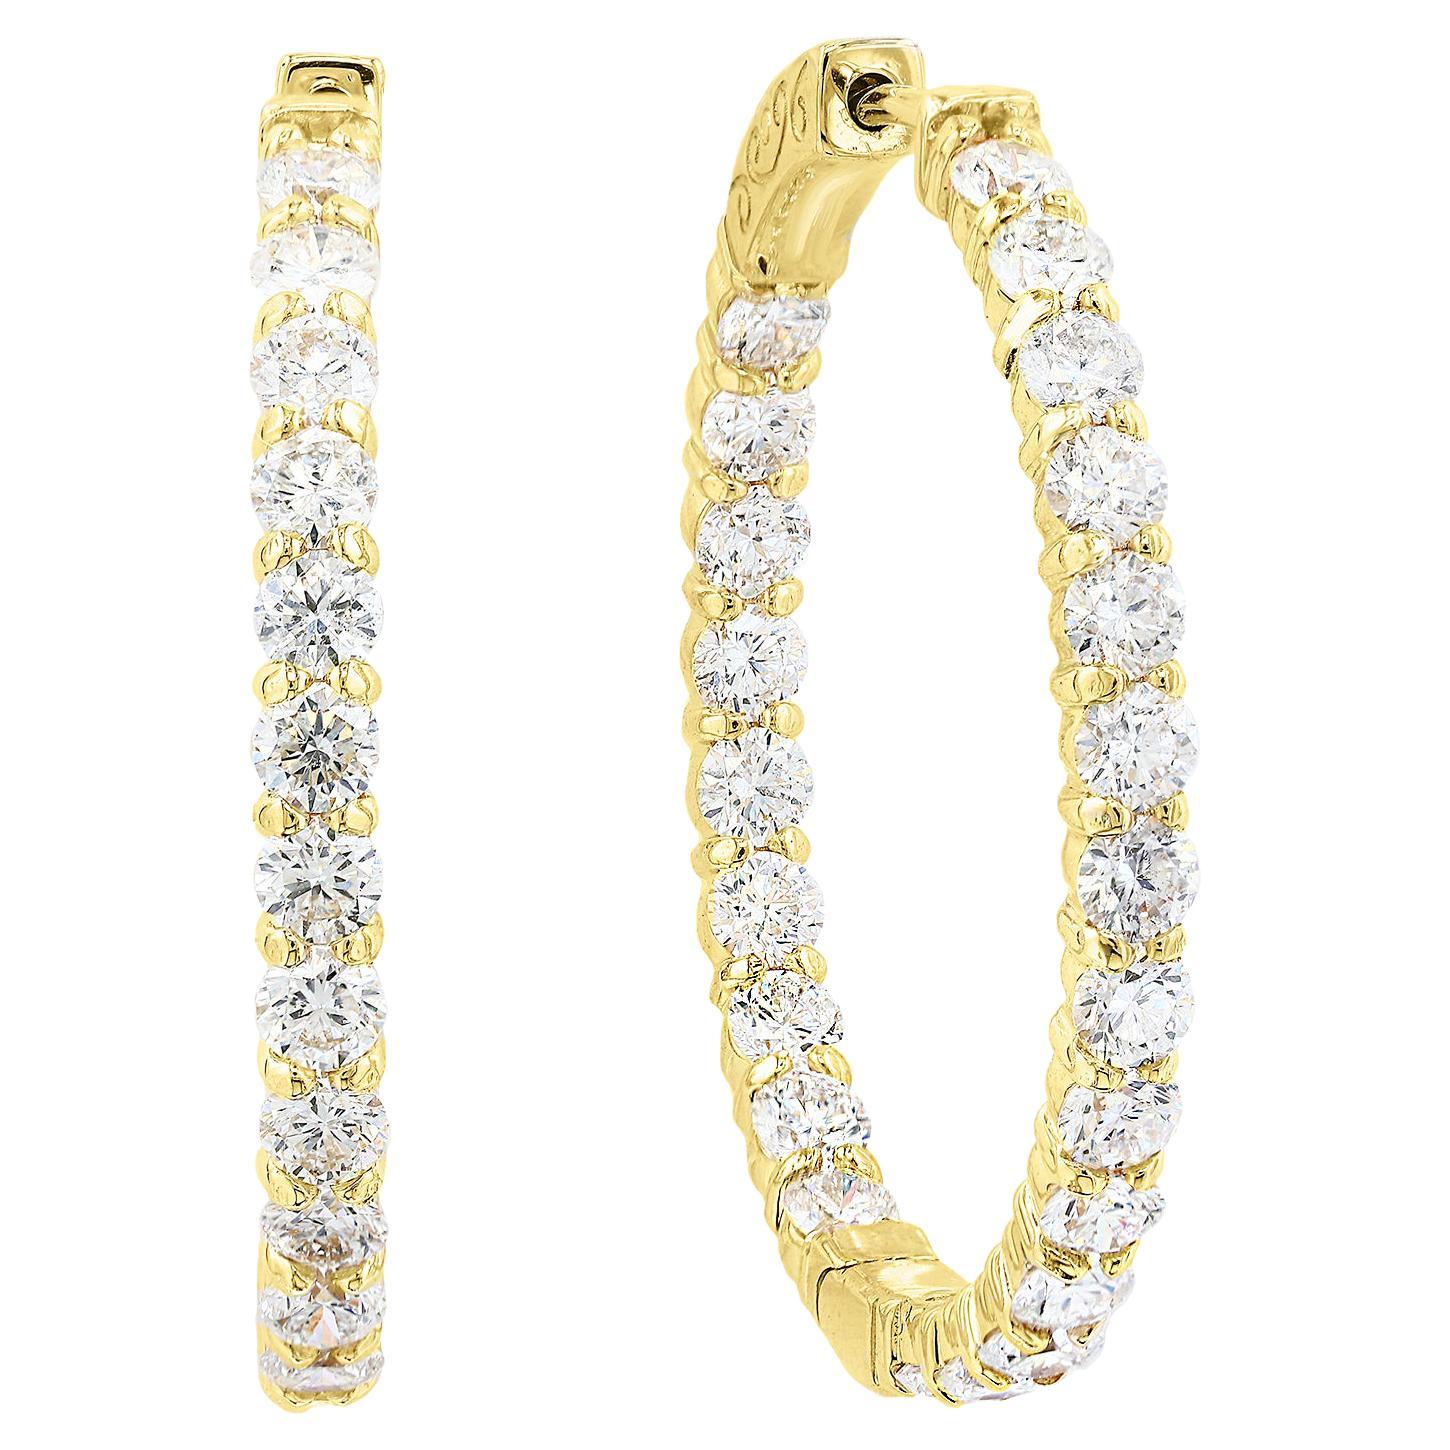 4.07 Carat Round Cut Diamond Hoop Earrings in 14K Yellow Gold For Sale